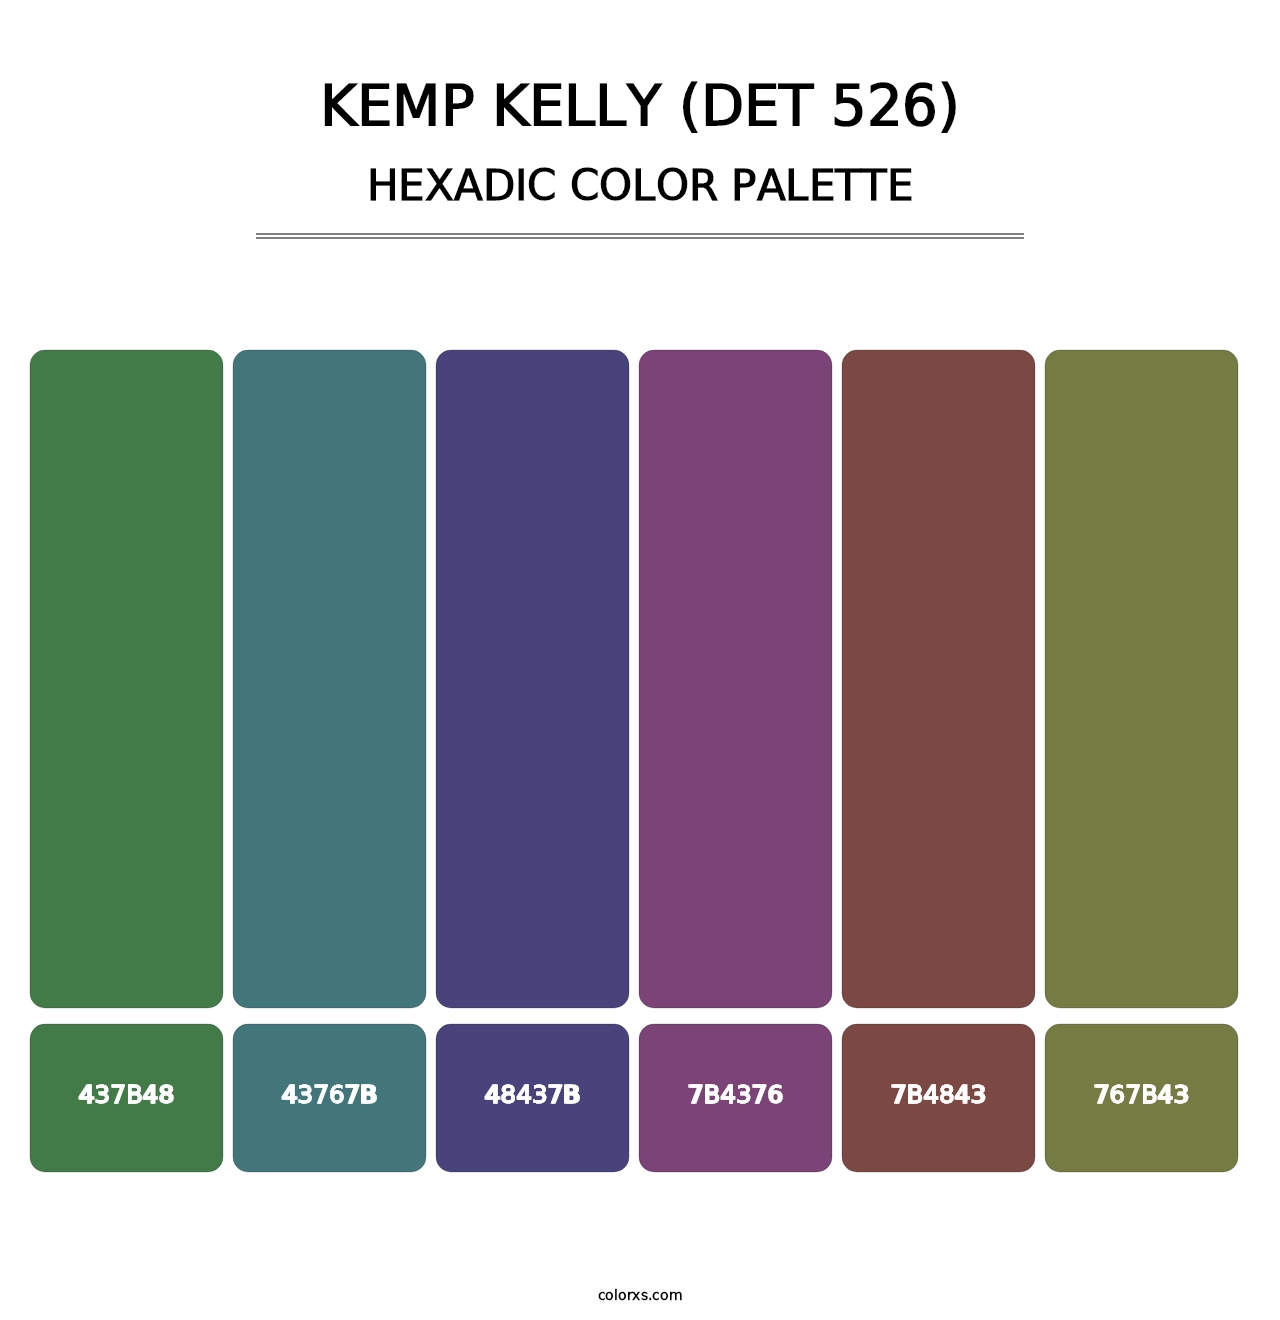 Kemp Kelly (DET 526) - Hexadic Color Palette